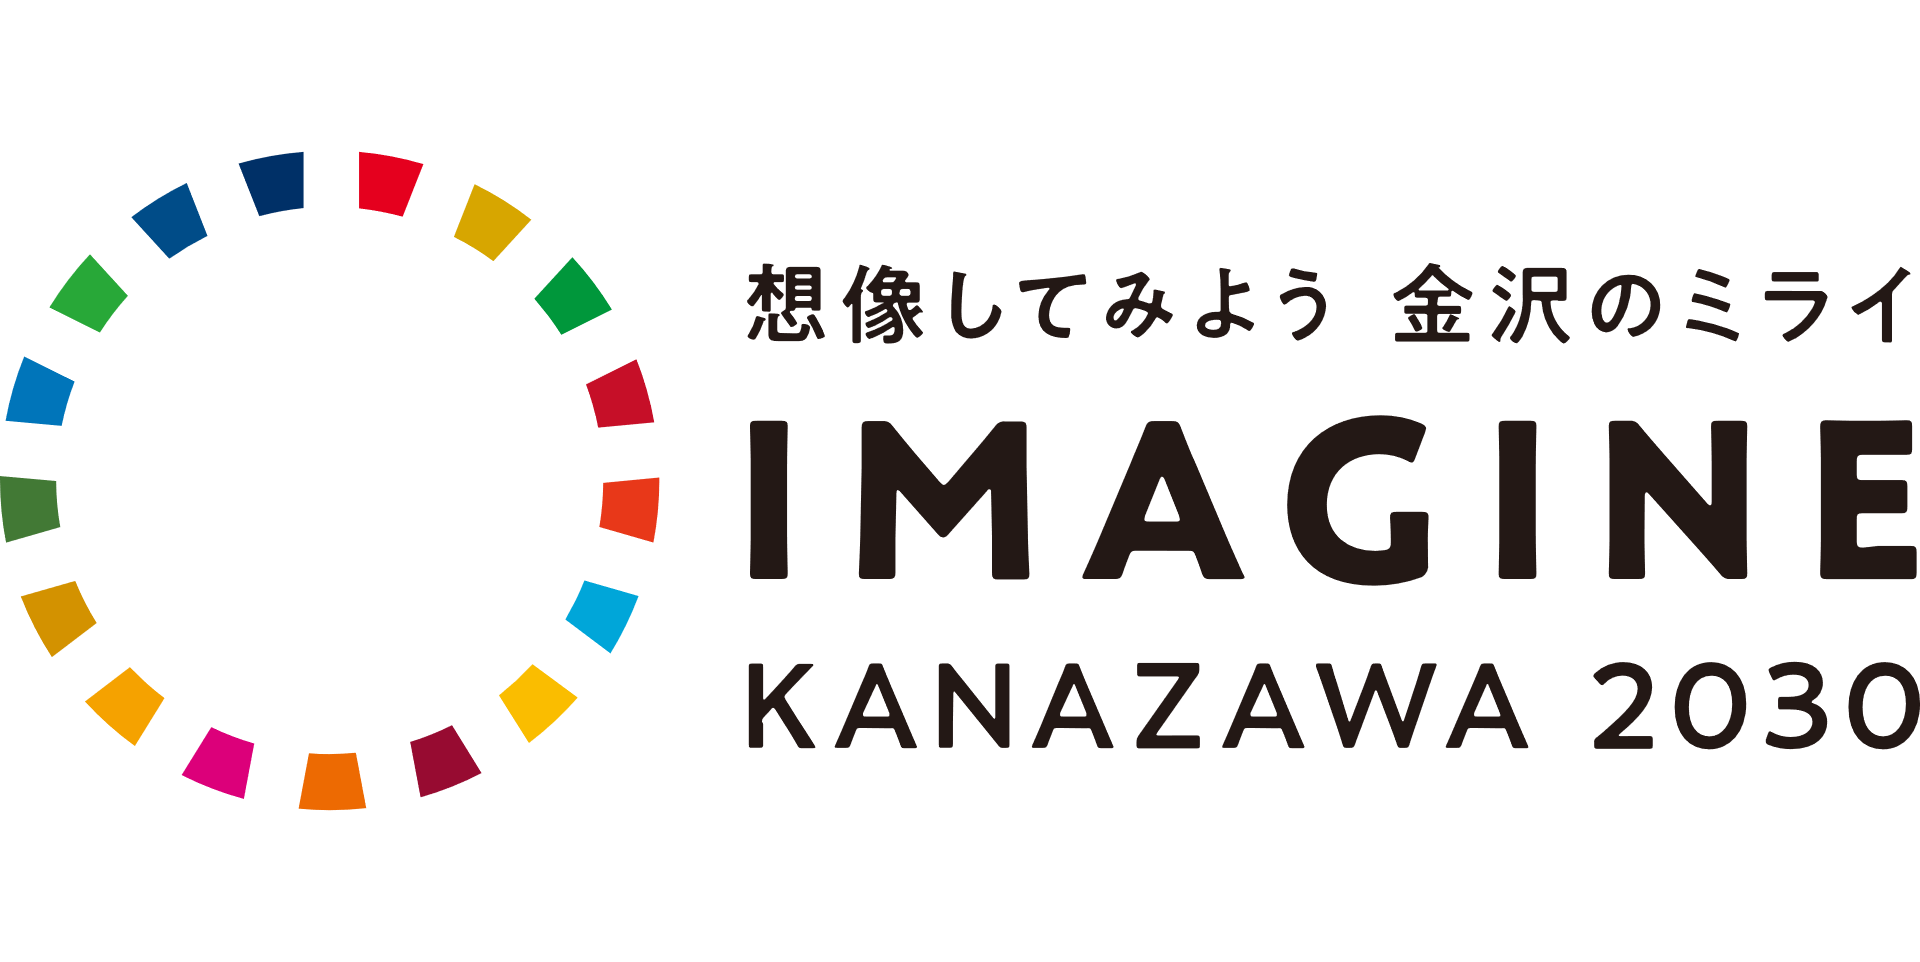 「IMAGINE KANAZAWA 2030」のパートナー企業となりました。